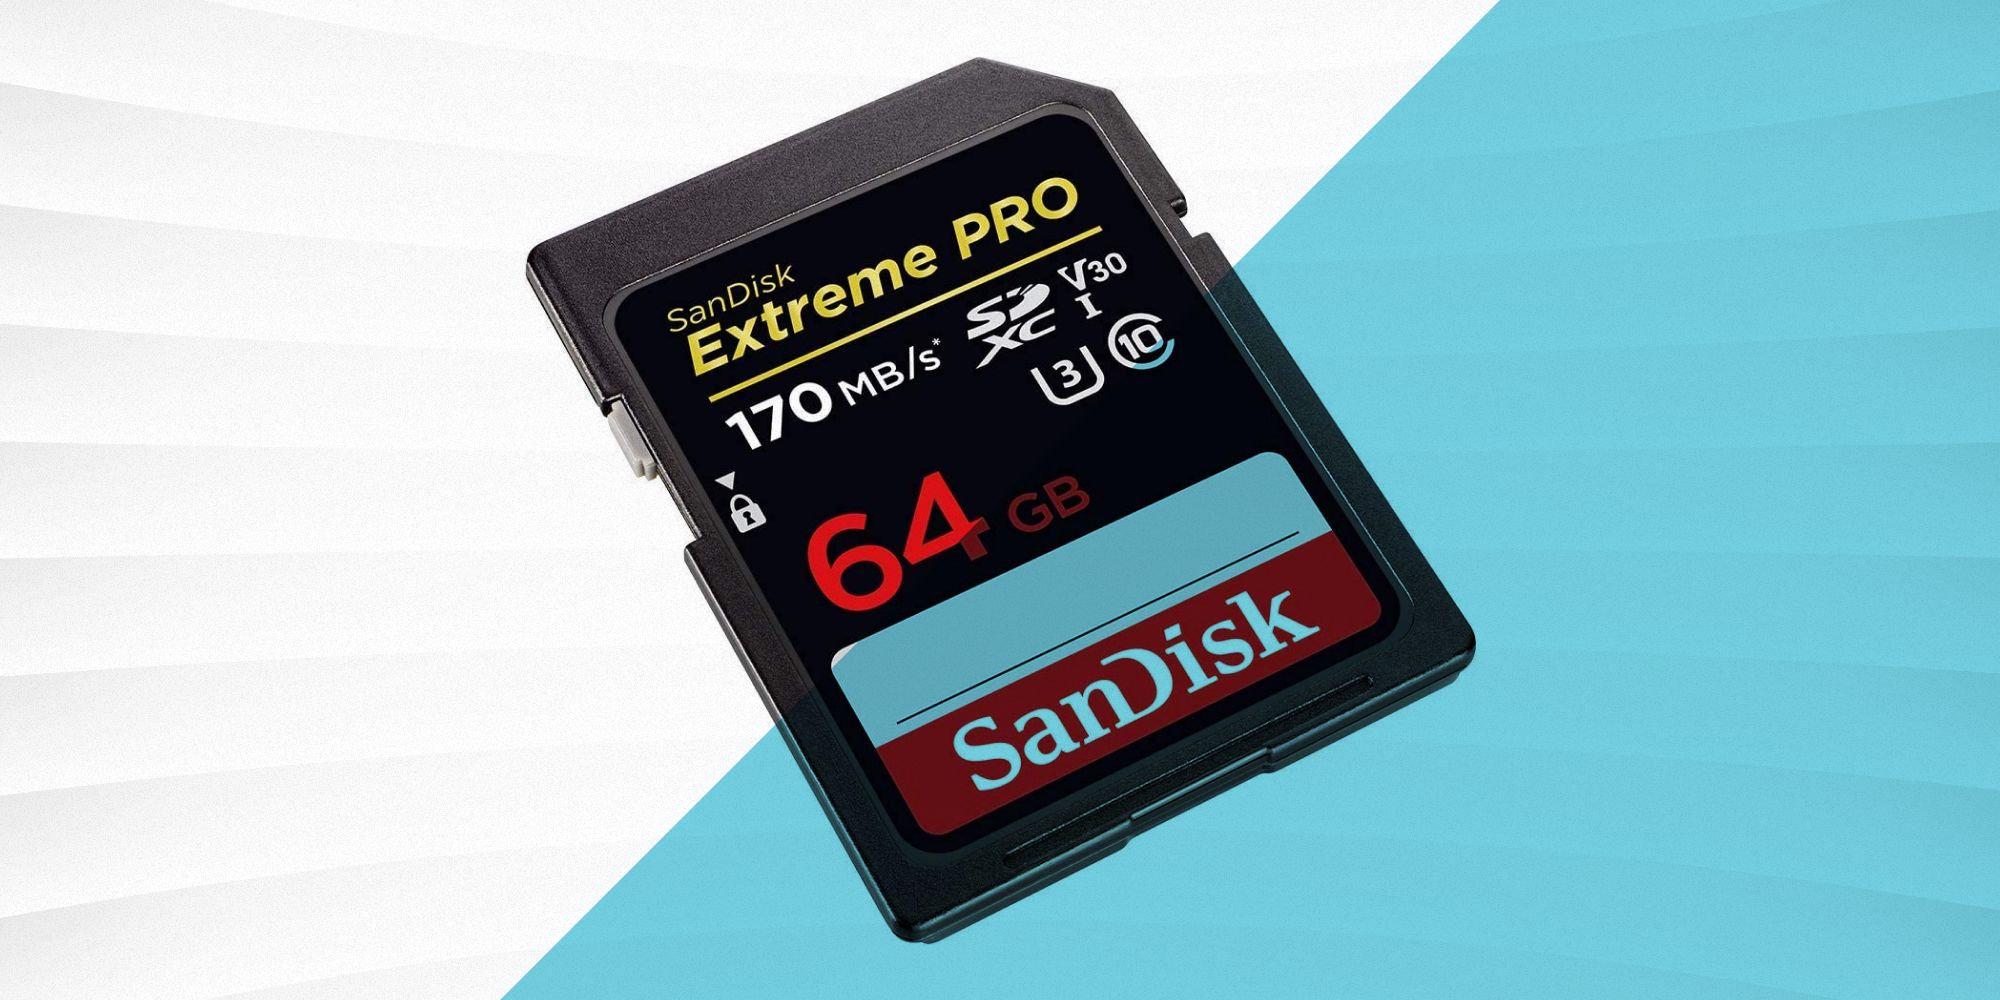 Lexar 64GB Micro SD Card 2 Pack, microSDXC UHS-I Flash Memory Card